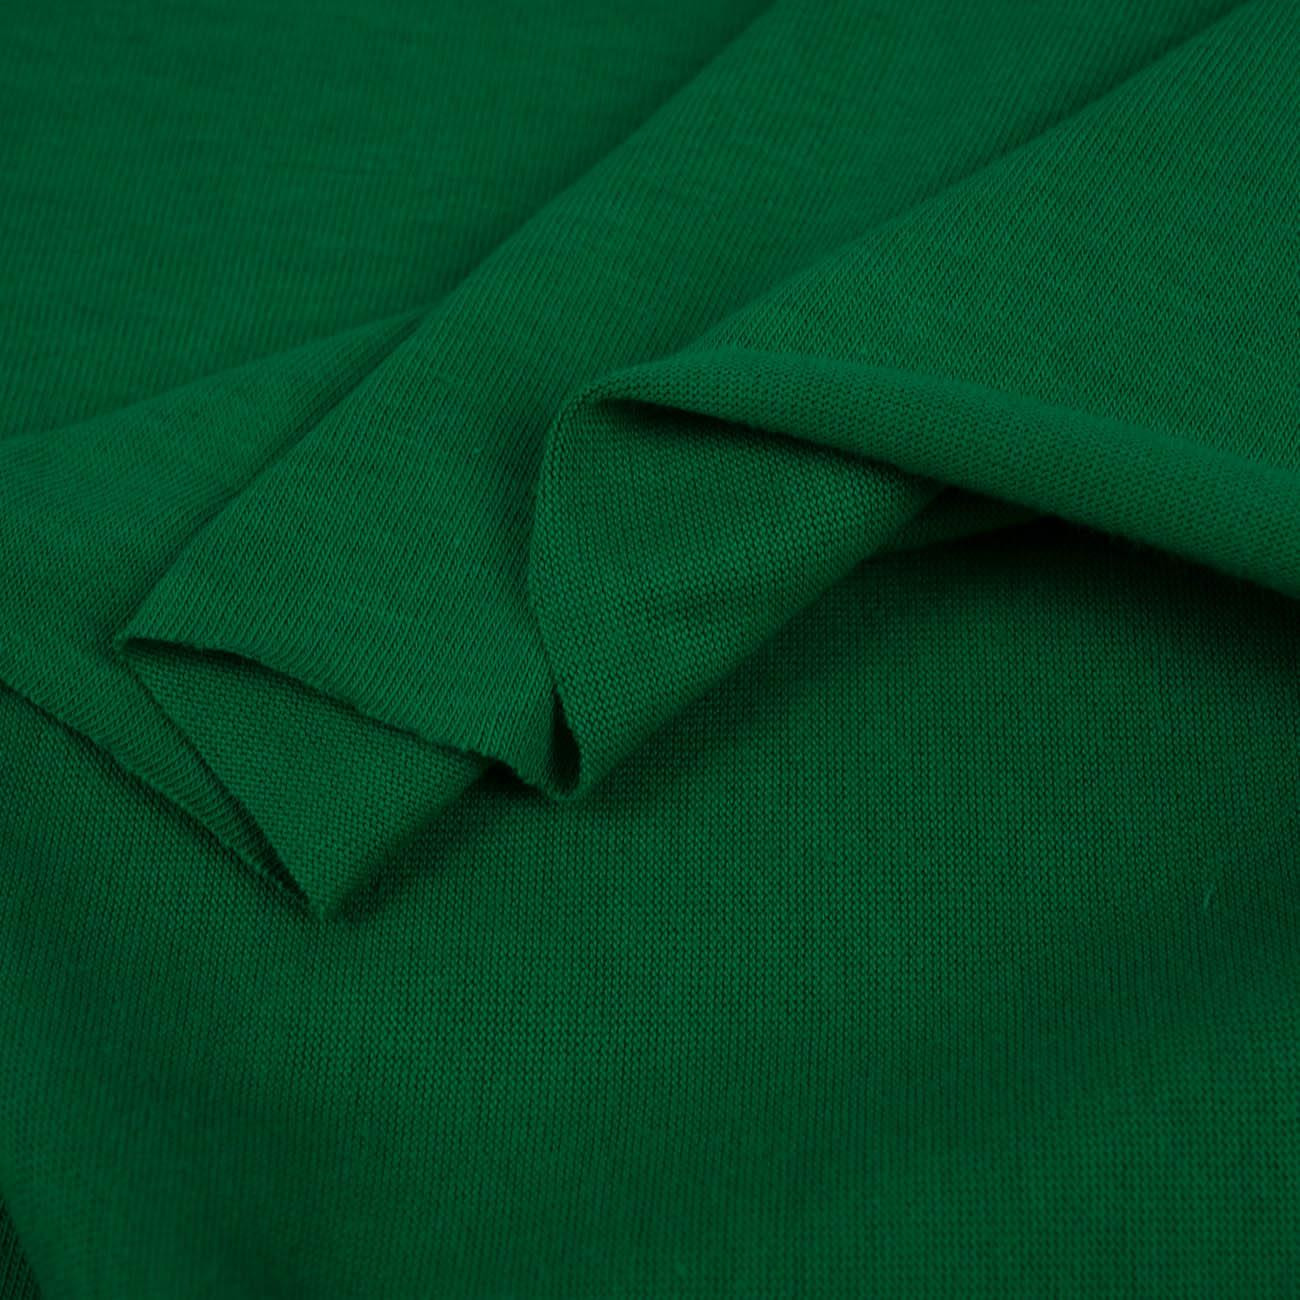 D-82 LUSH MEADOW - T-shirt knit fabric 100% cotton T140